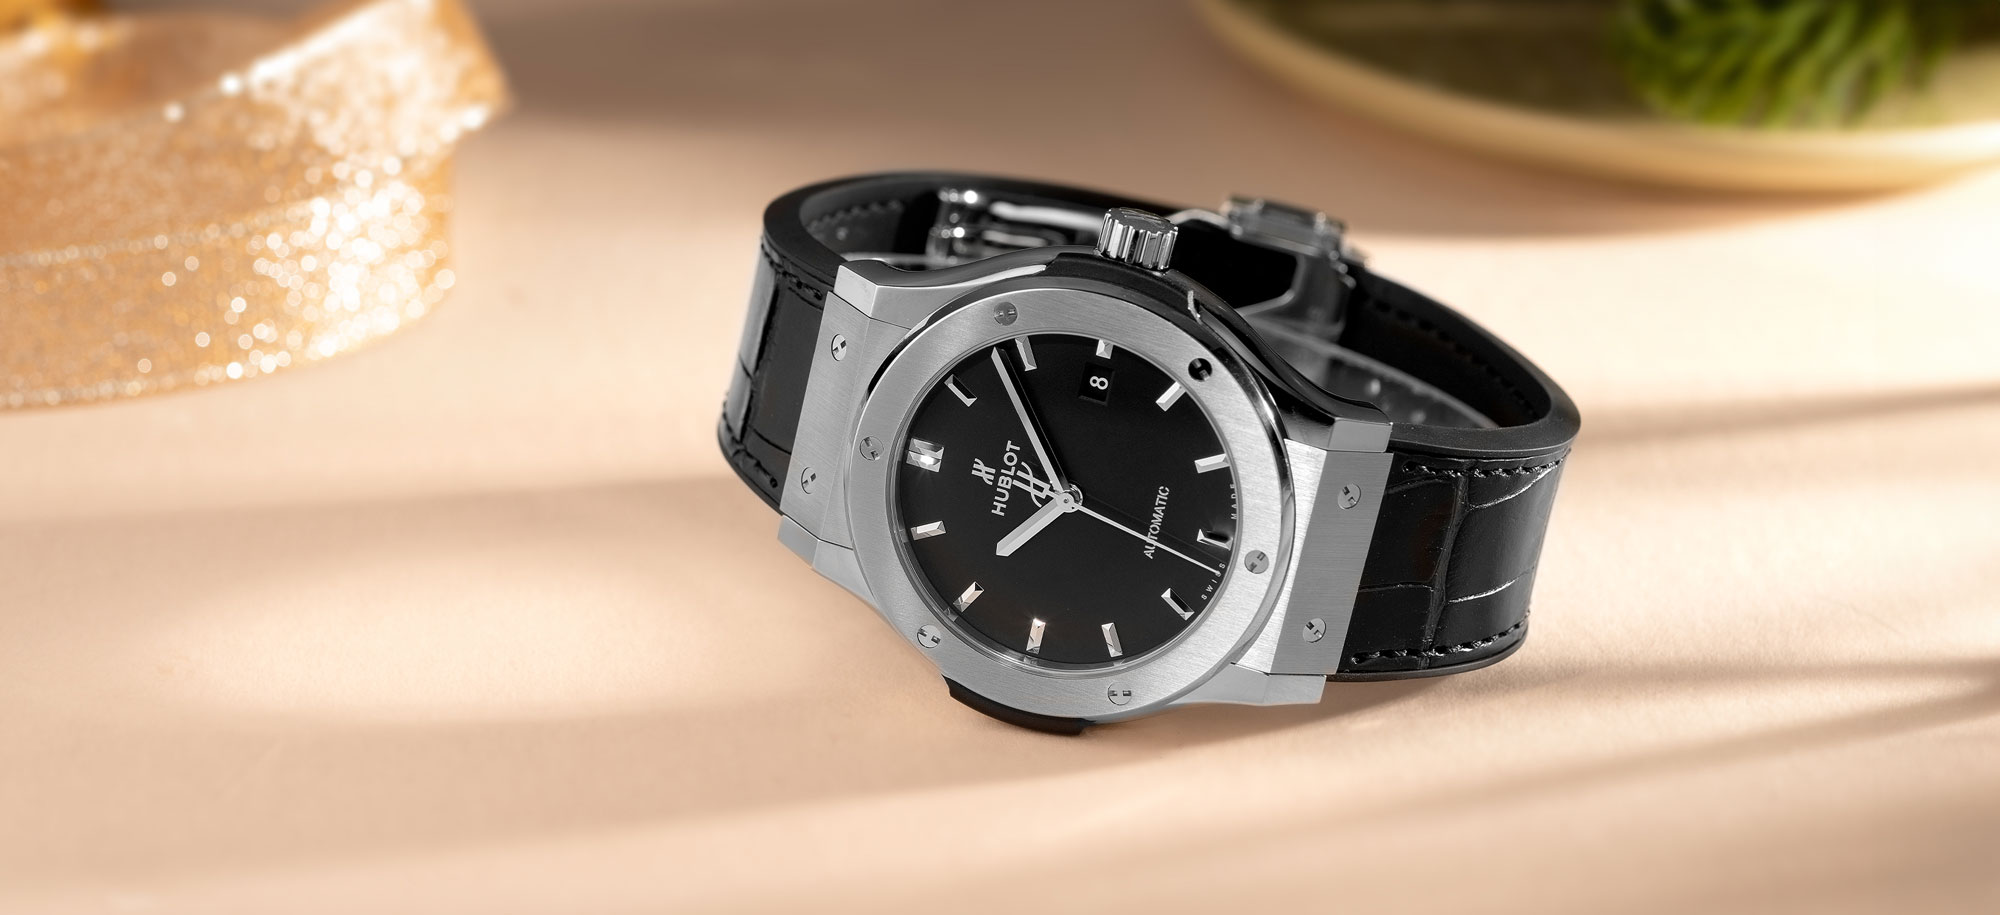 Hublot Classic Fusion Titanium Automatic Watch